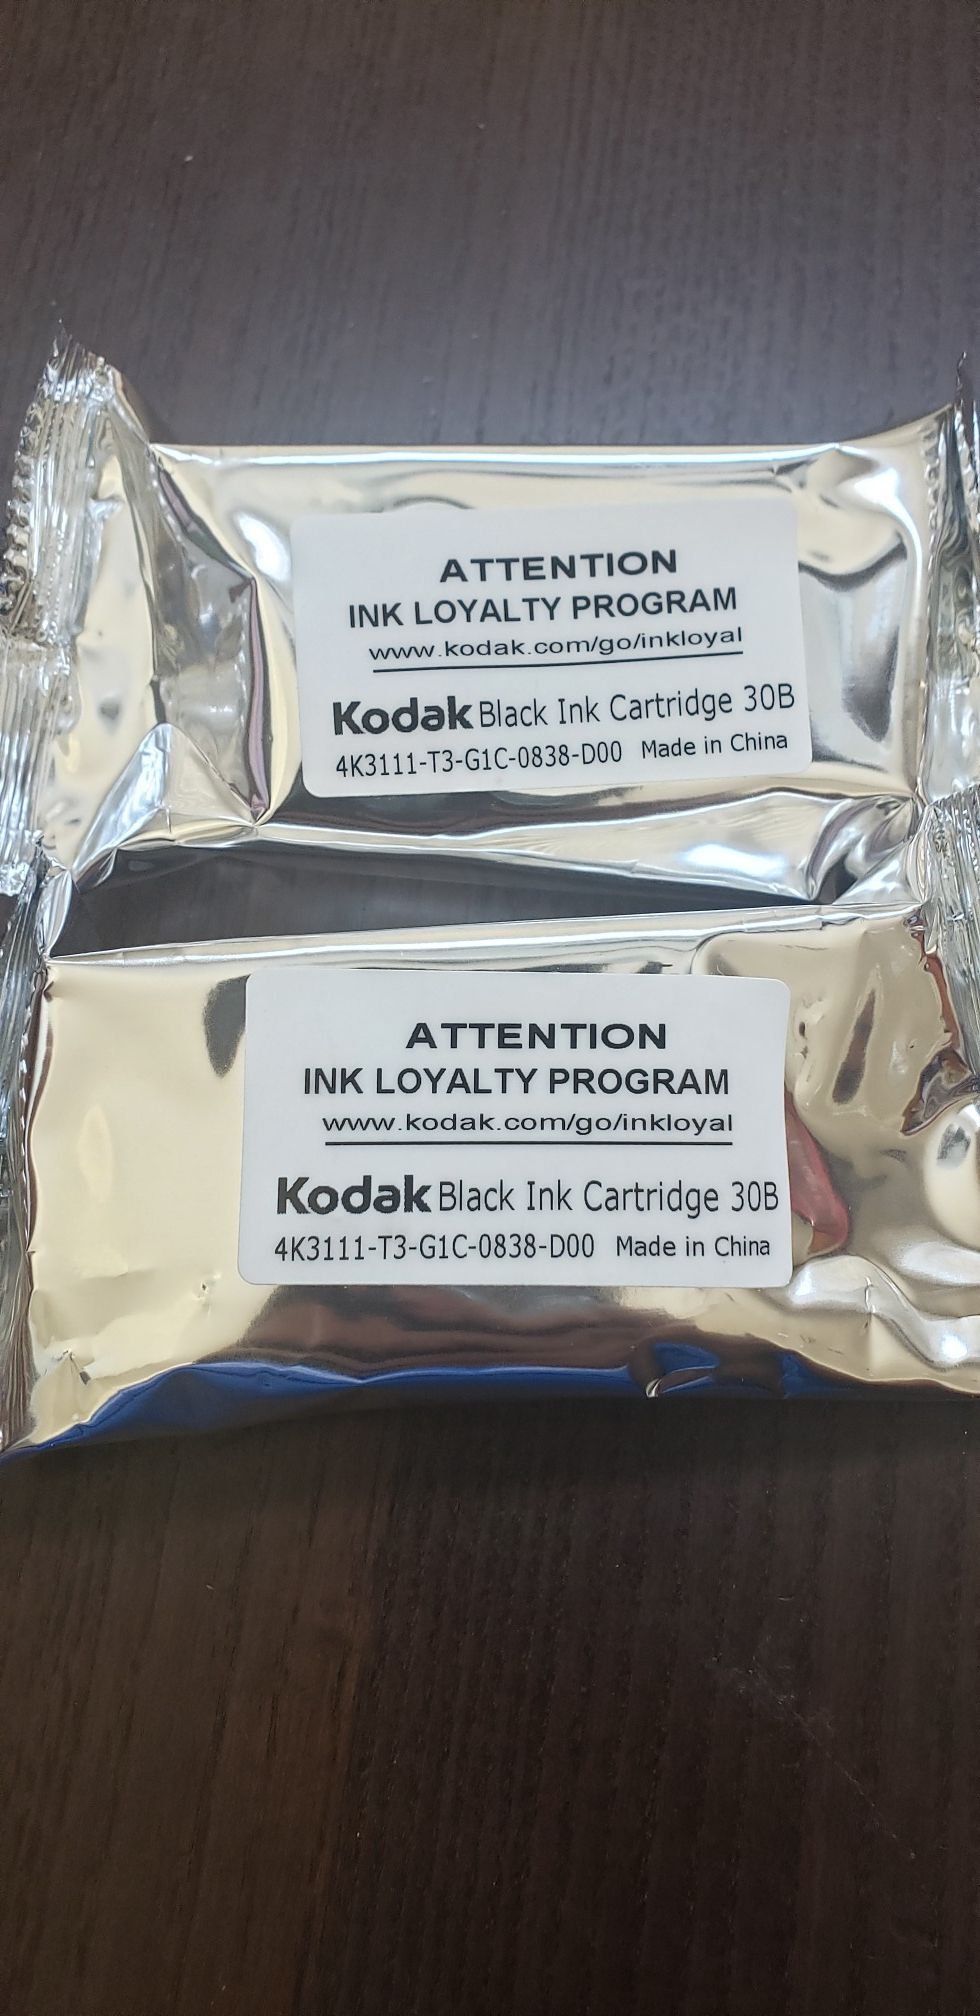 Kodak Ink Cartridges - Black 30B